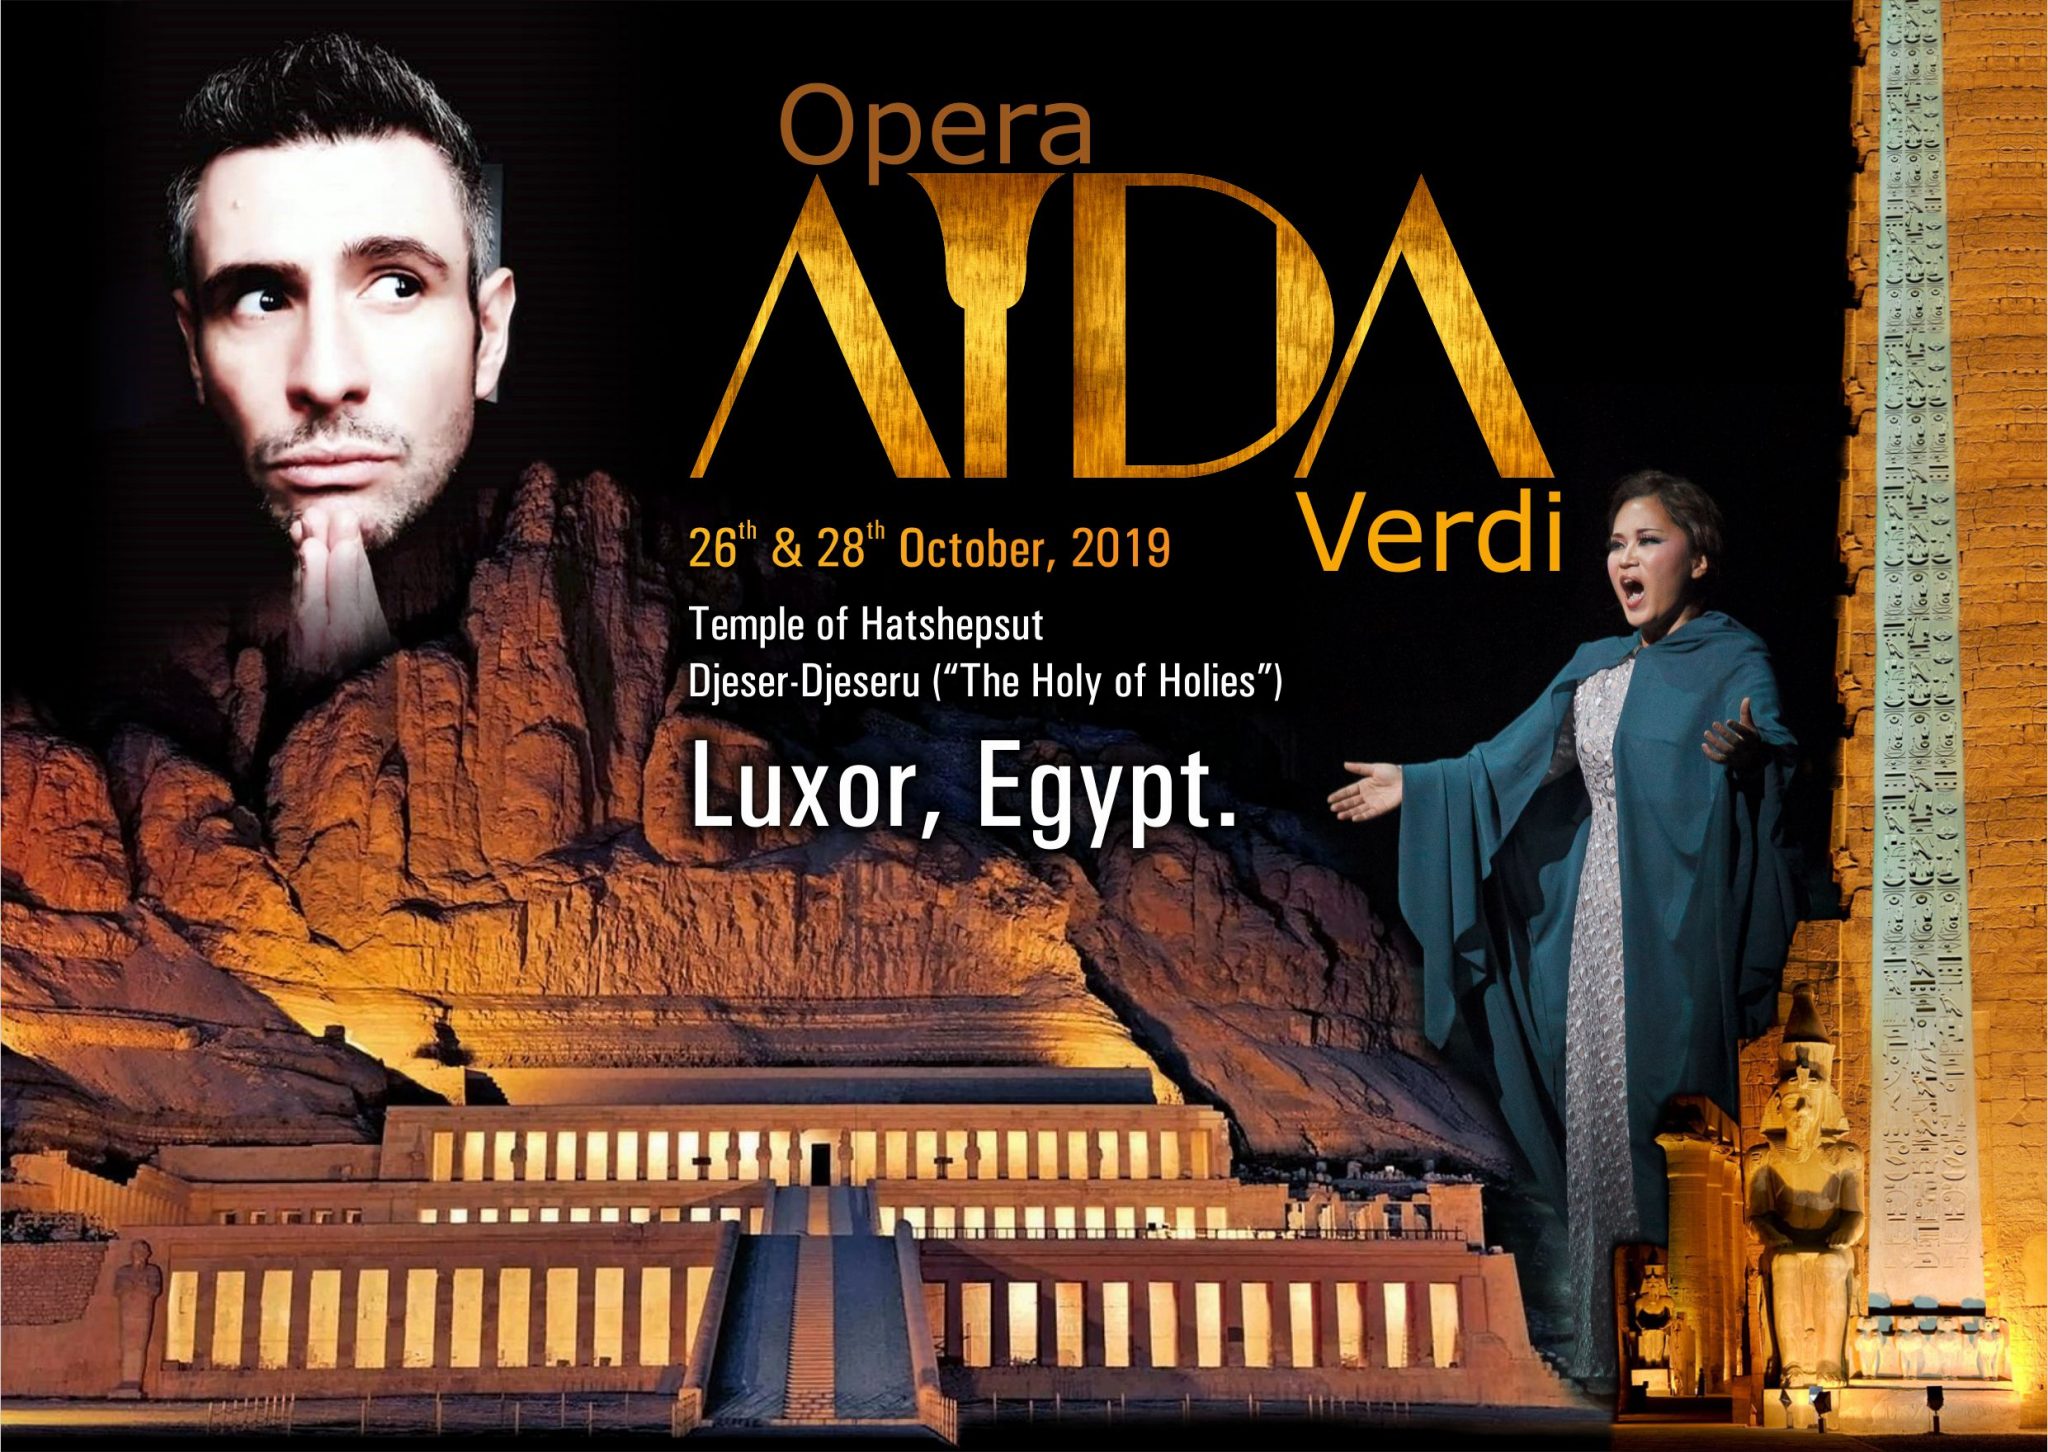 Opera Aida at The Temple of Hatshepsut October 2019